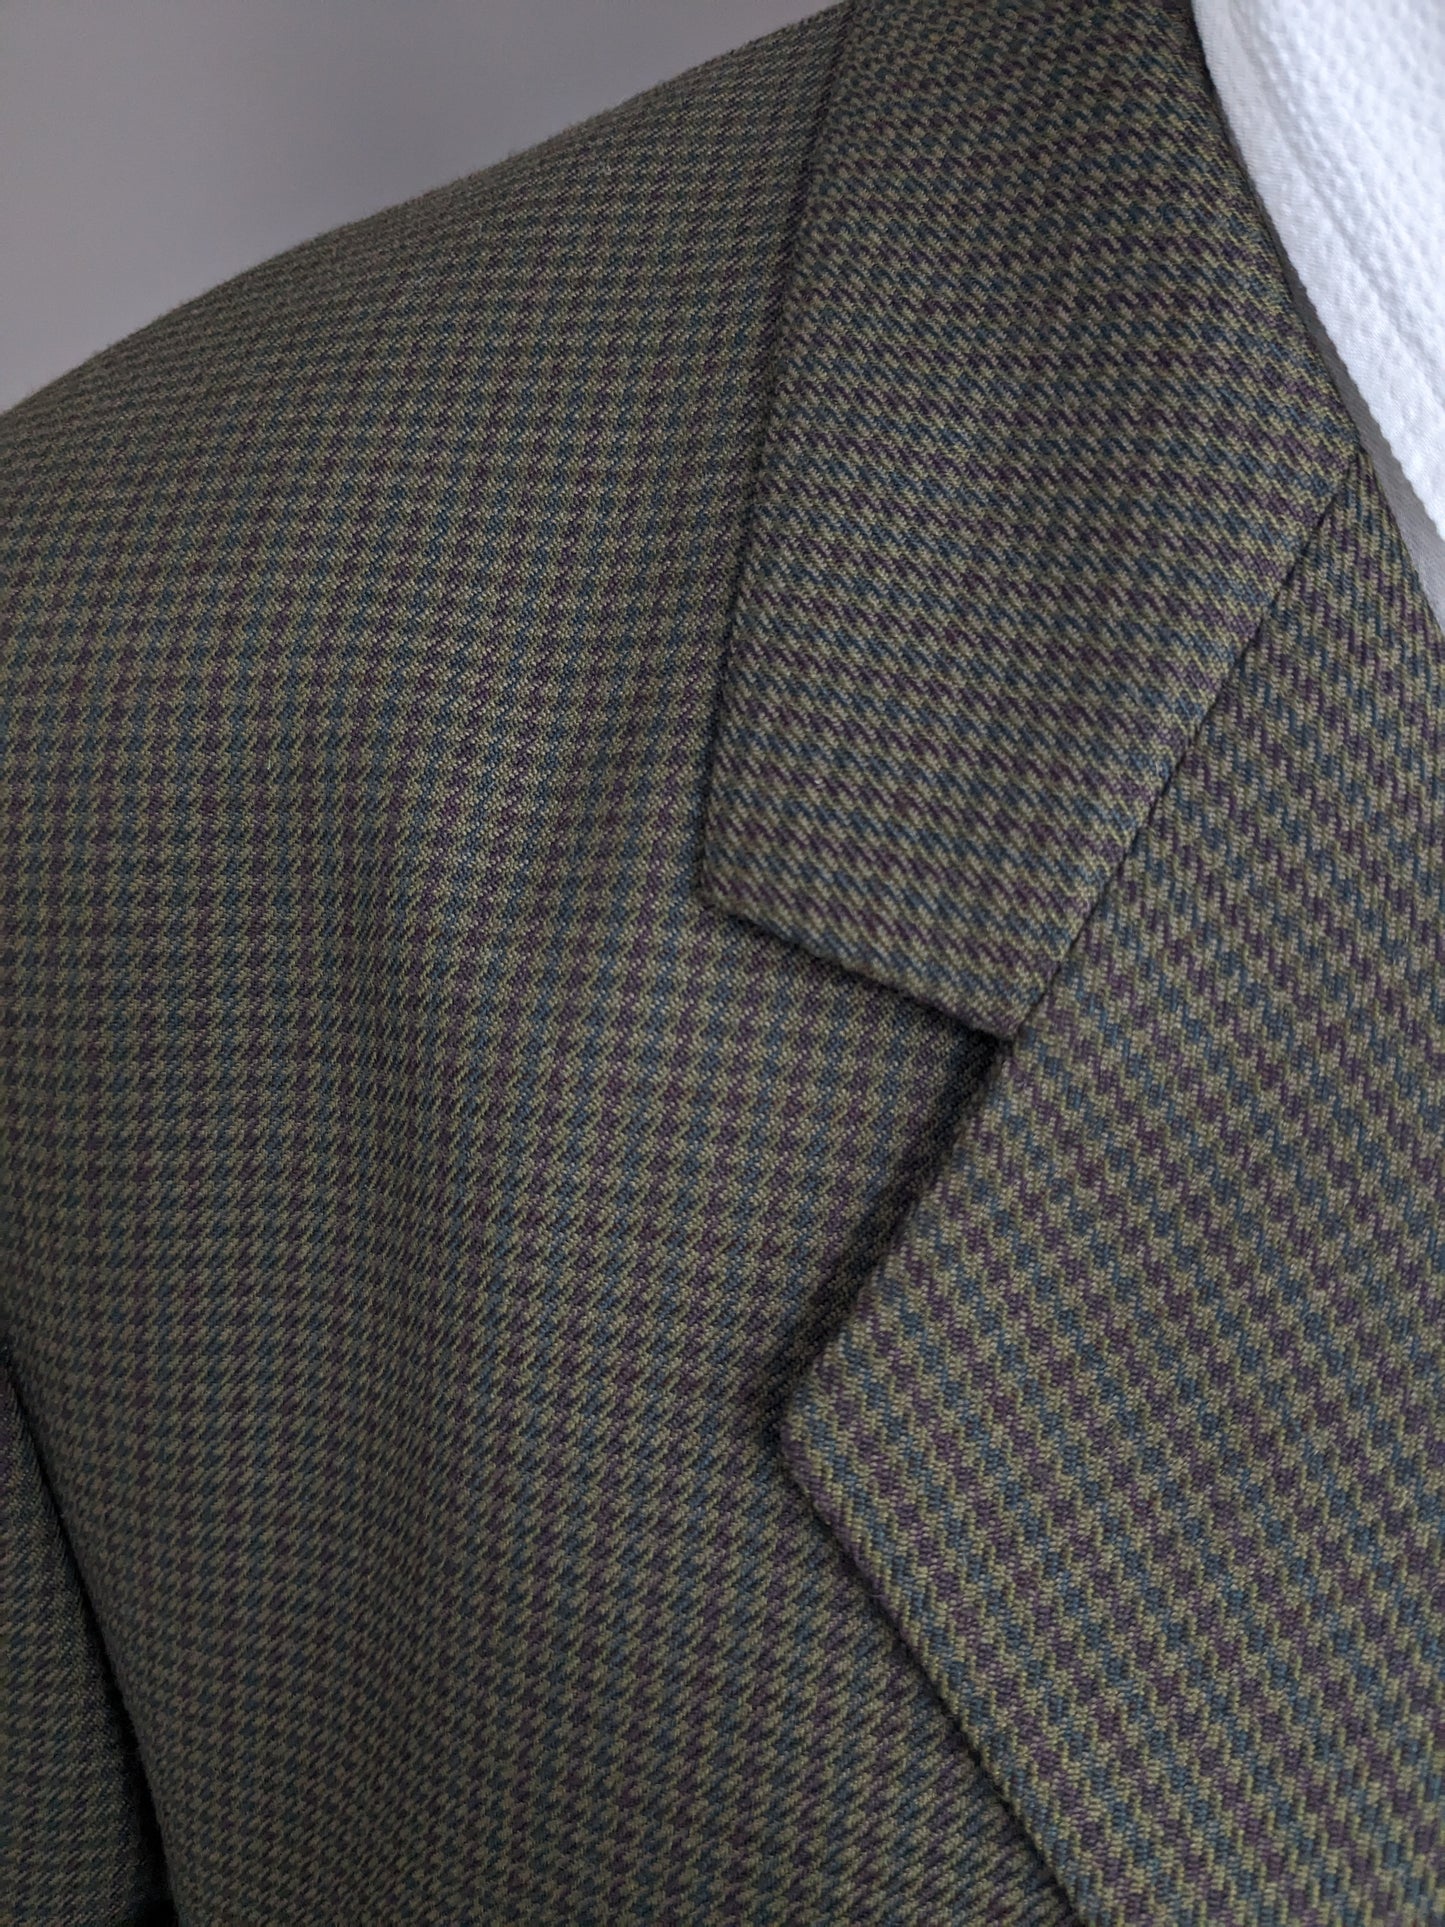 Sergio Albani woolen jacket. Green Bordeaux motif. Size 54 / L.